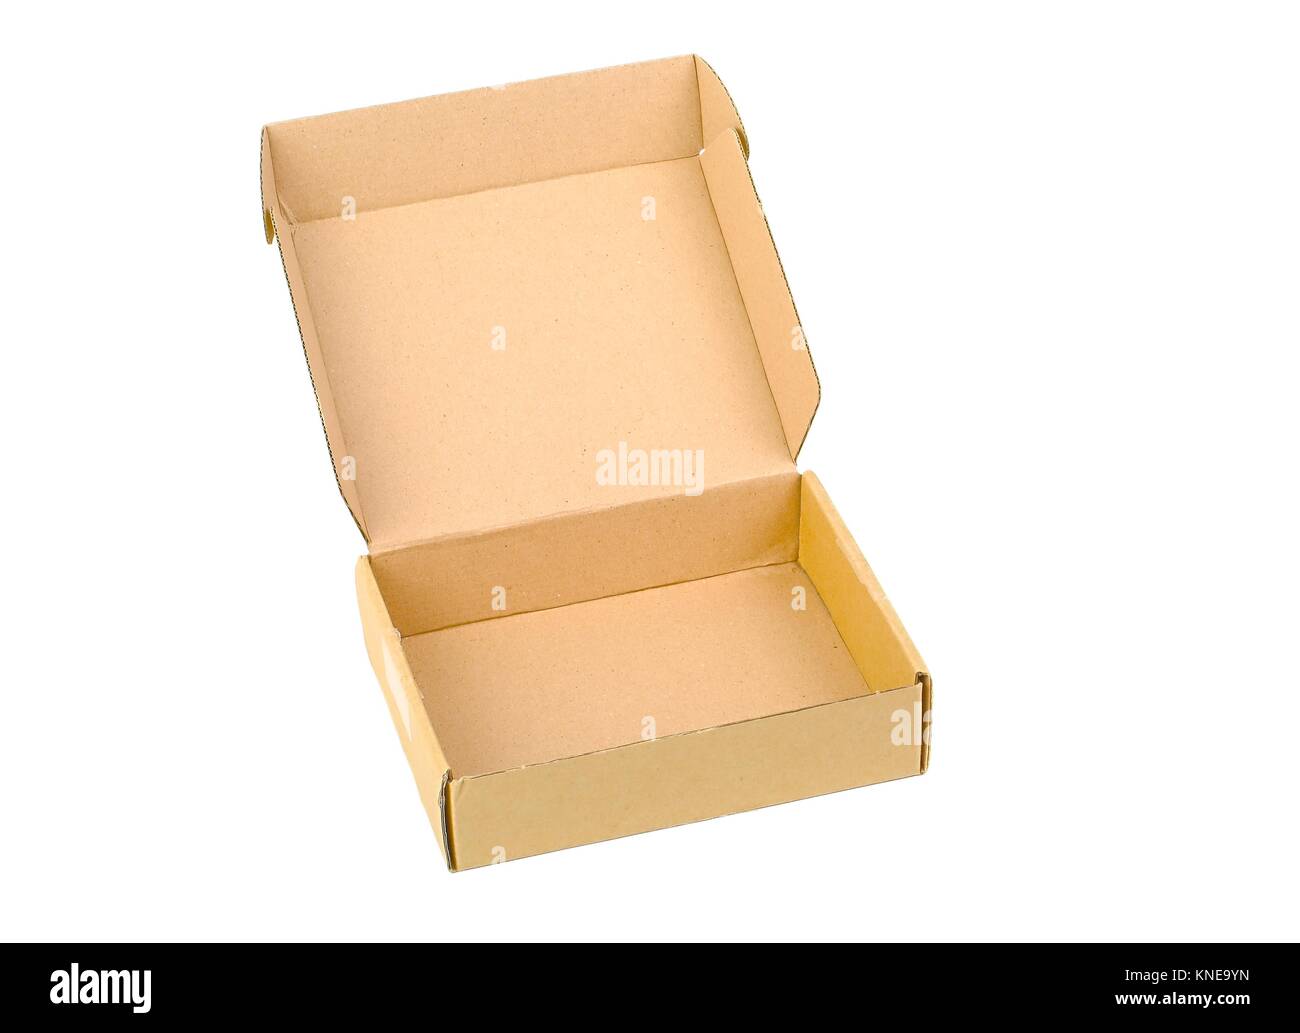 Cardboard Box Open Stock Photo